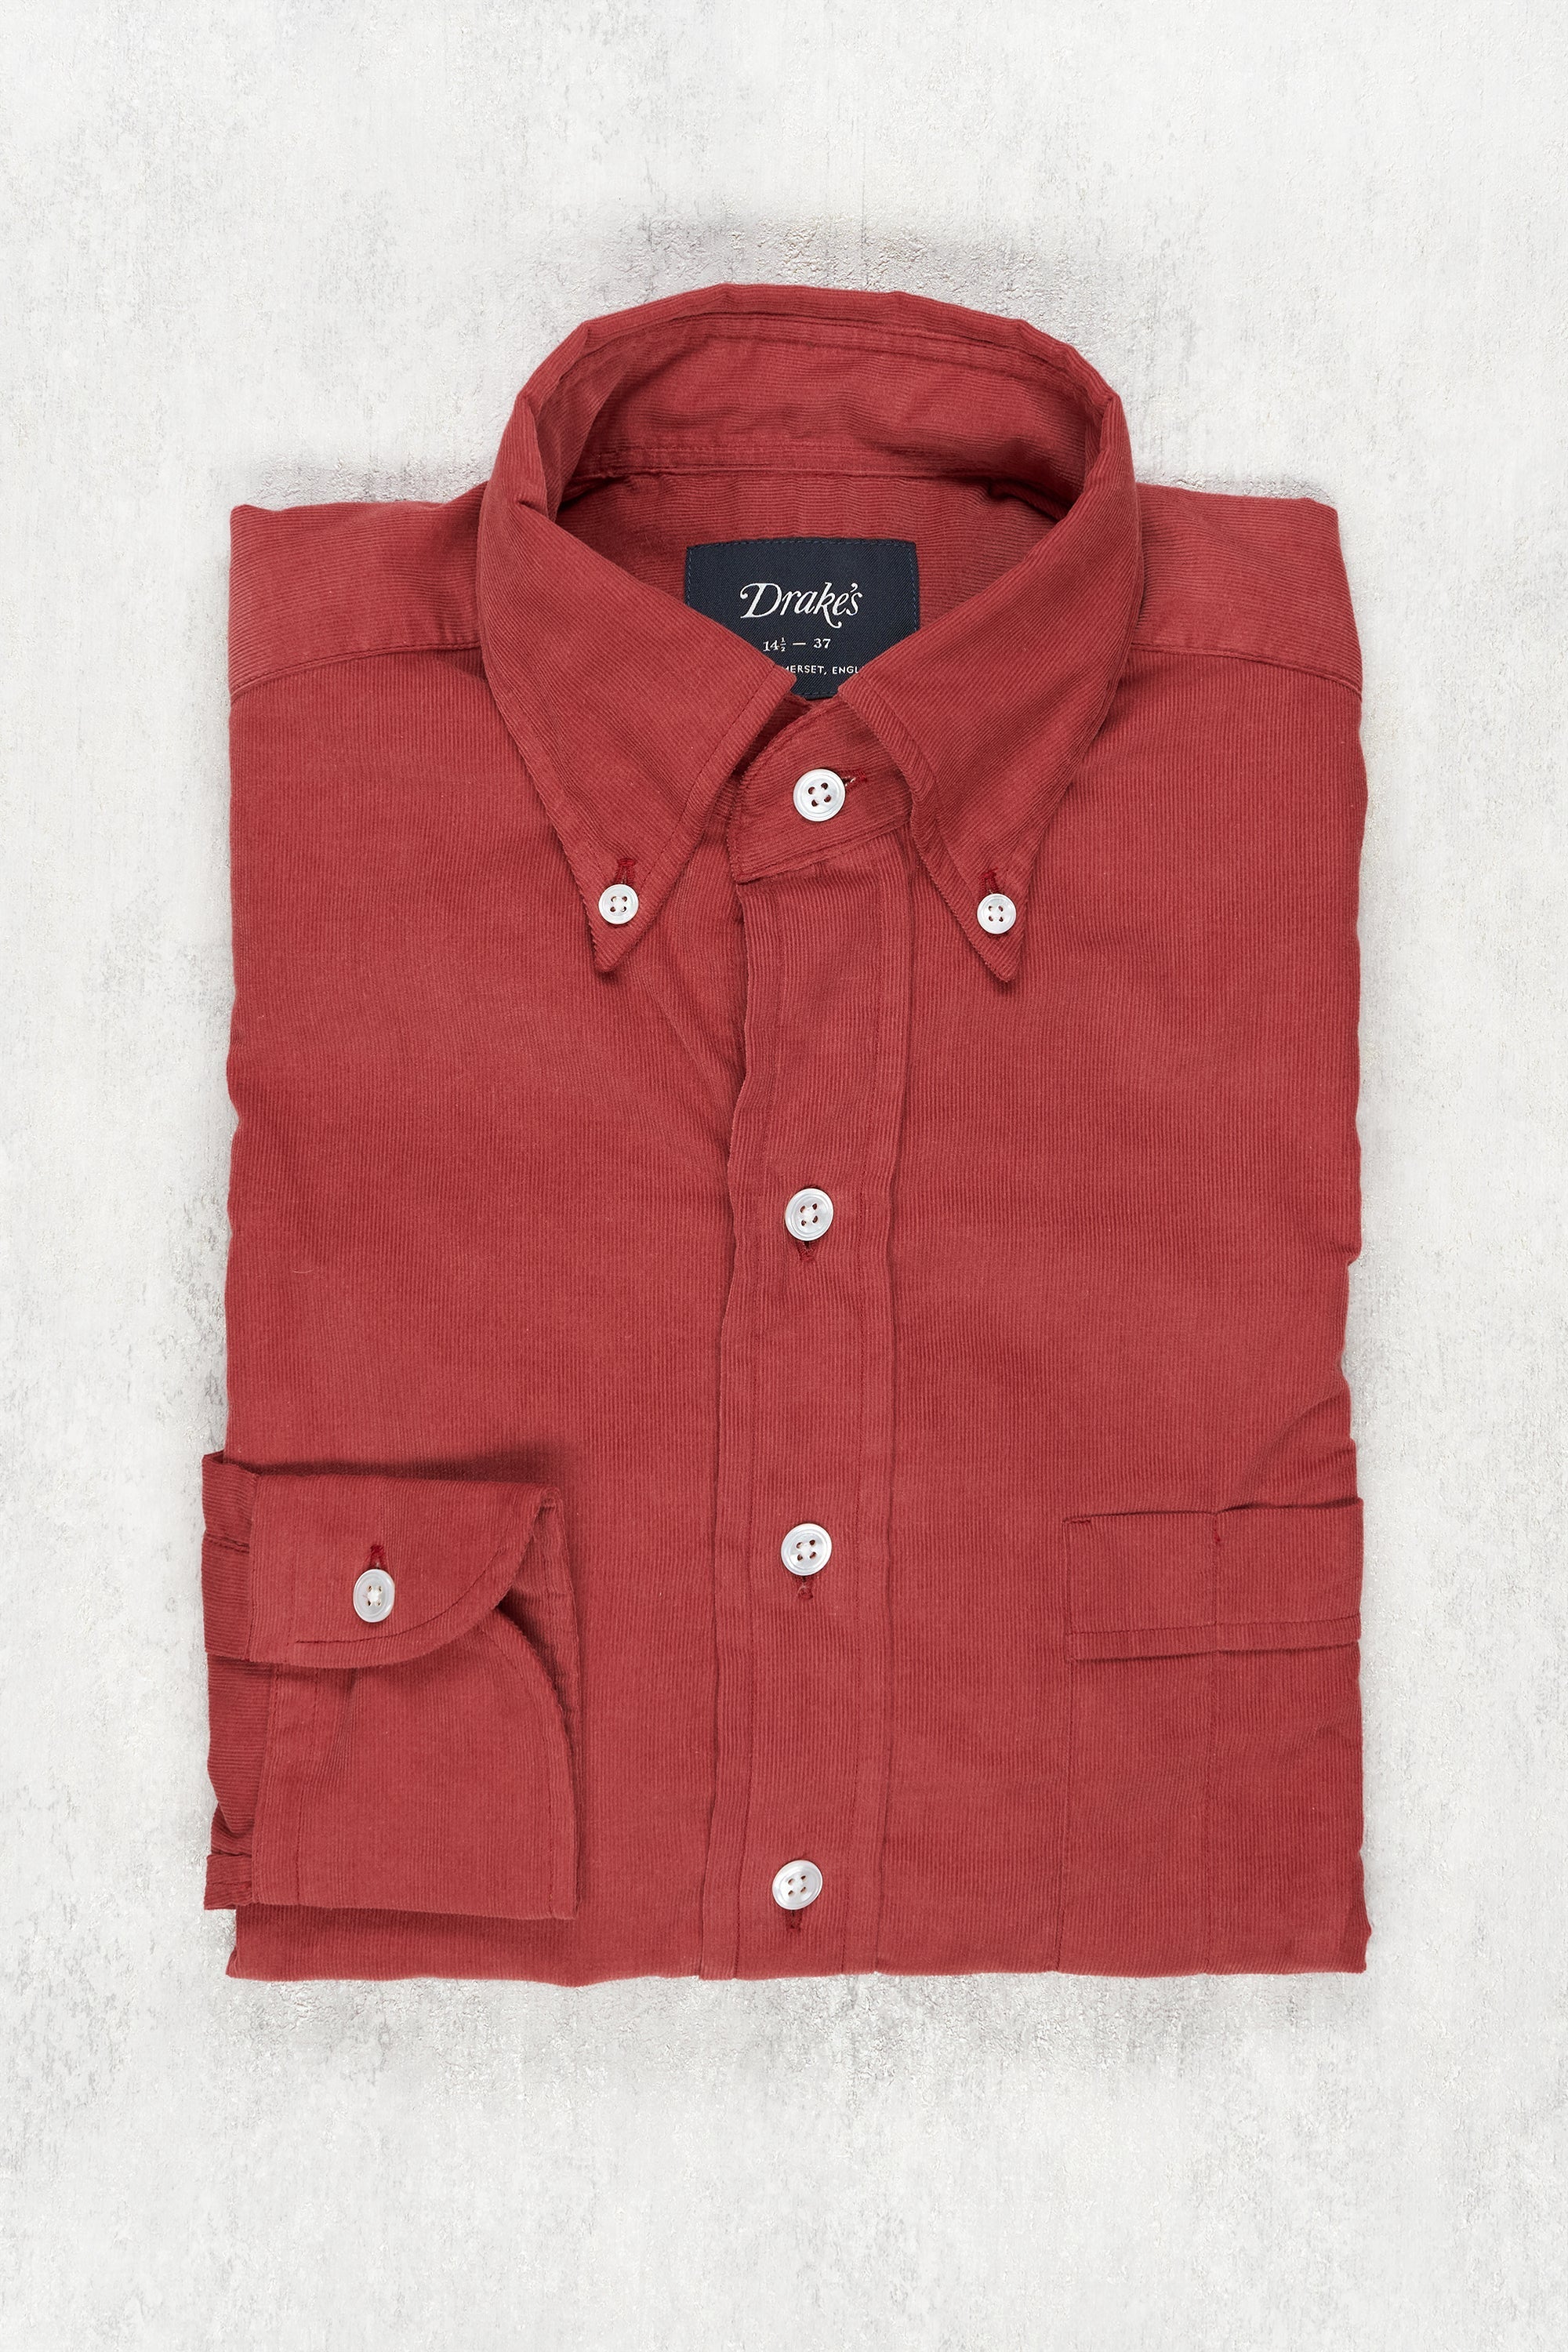 Drake's Red Corduroy Button-down Shirt